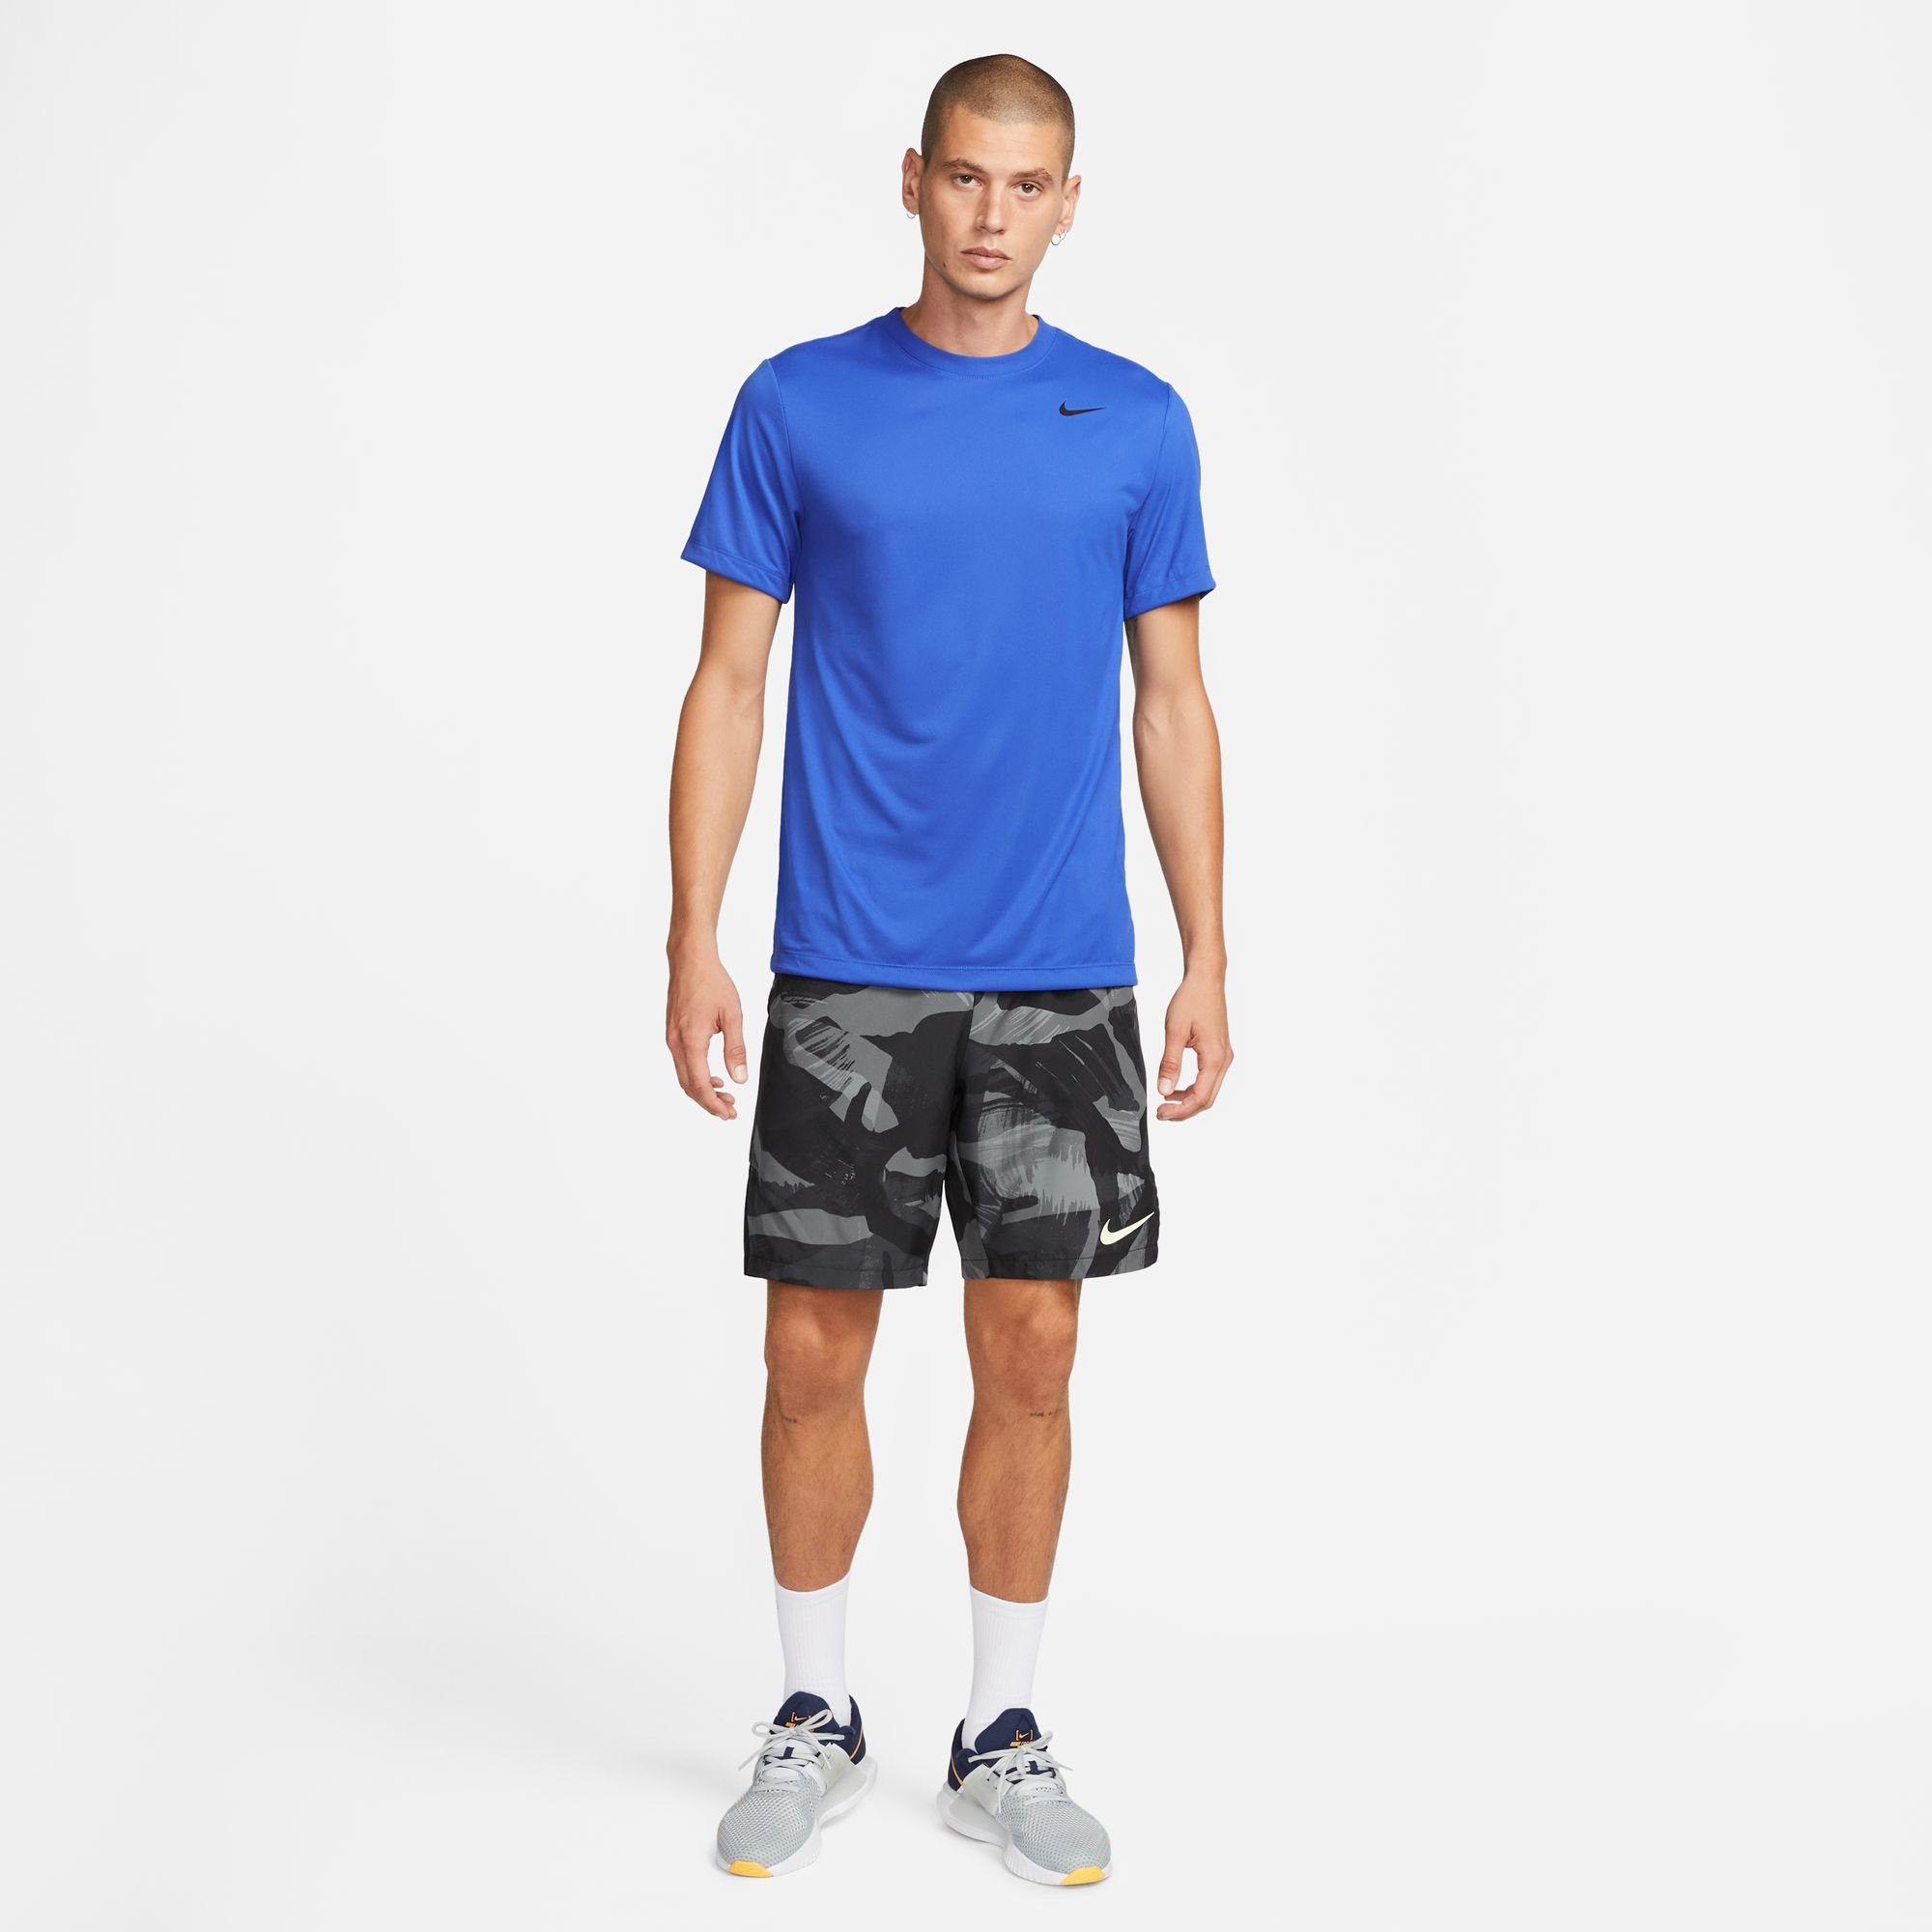 MEN'S T-SHIRT FITNESS DRI-FIT blau Nike LEGEND Trainingsshirt